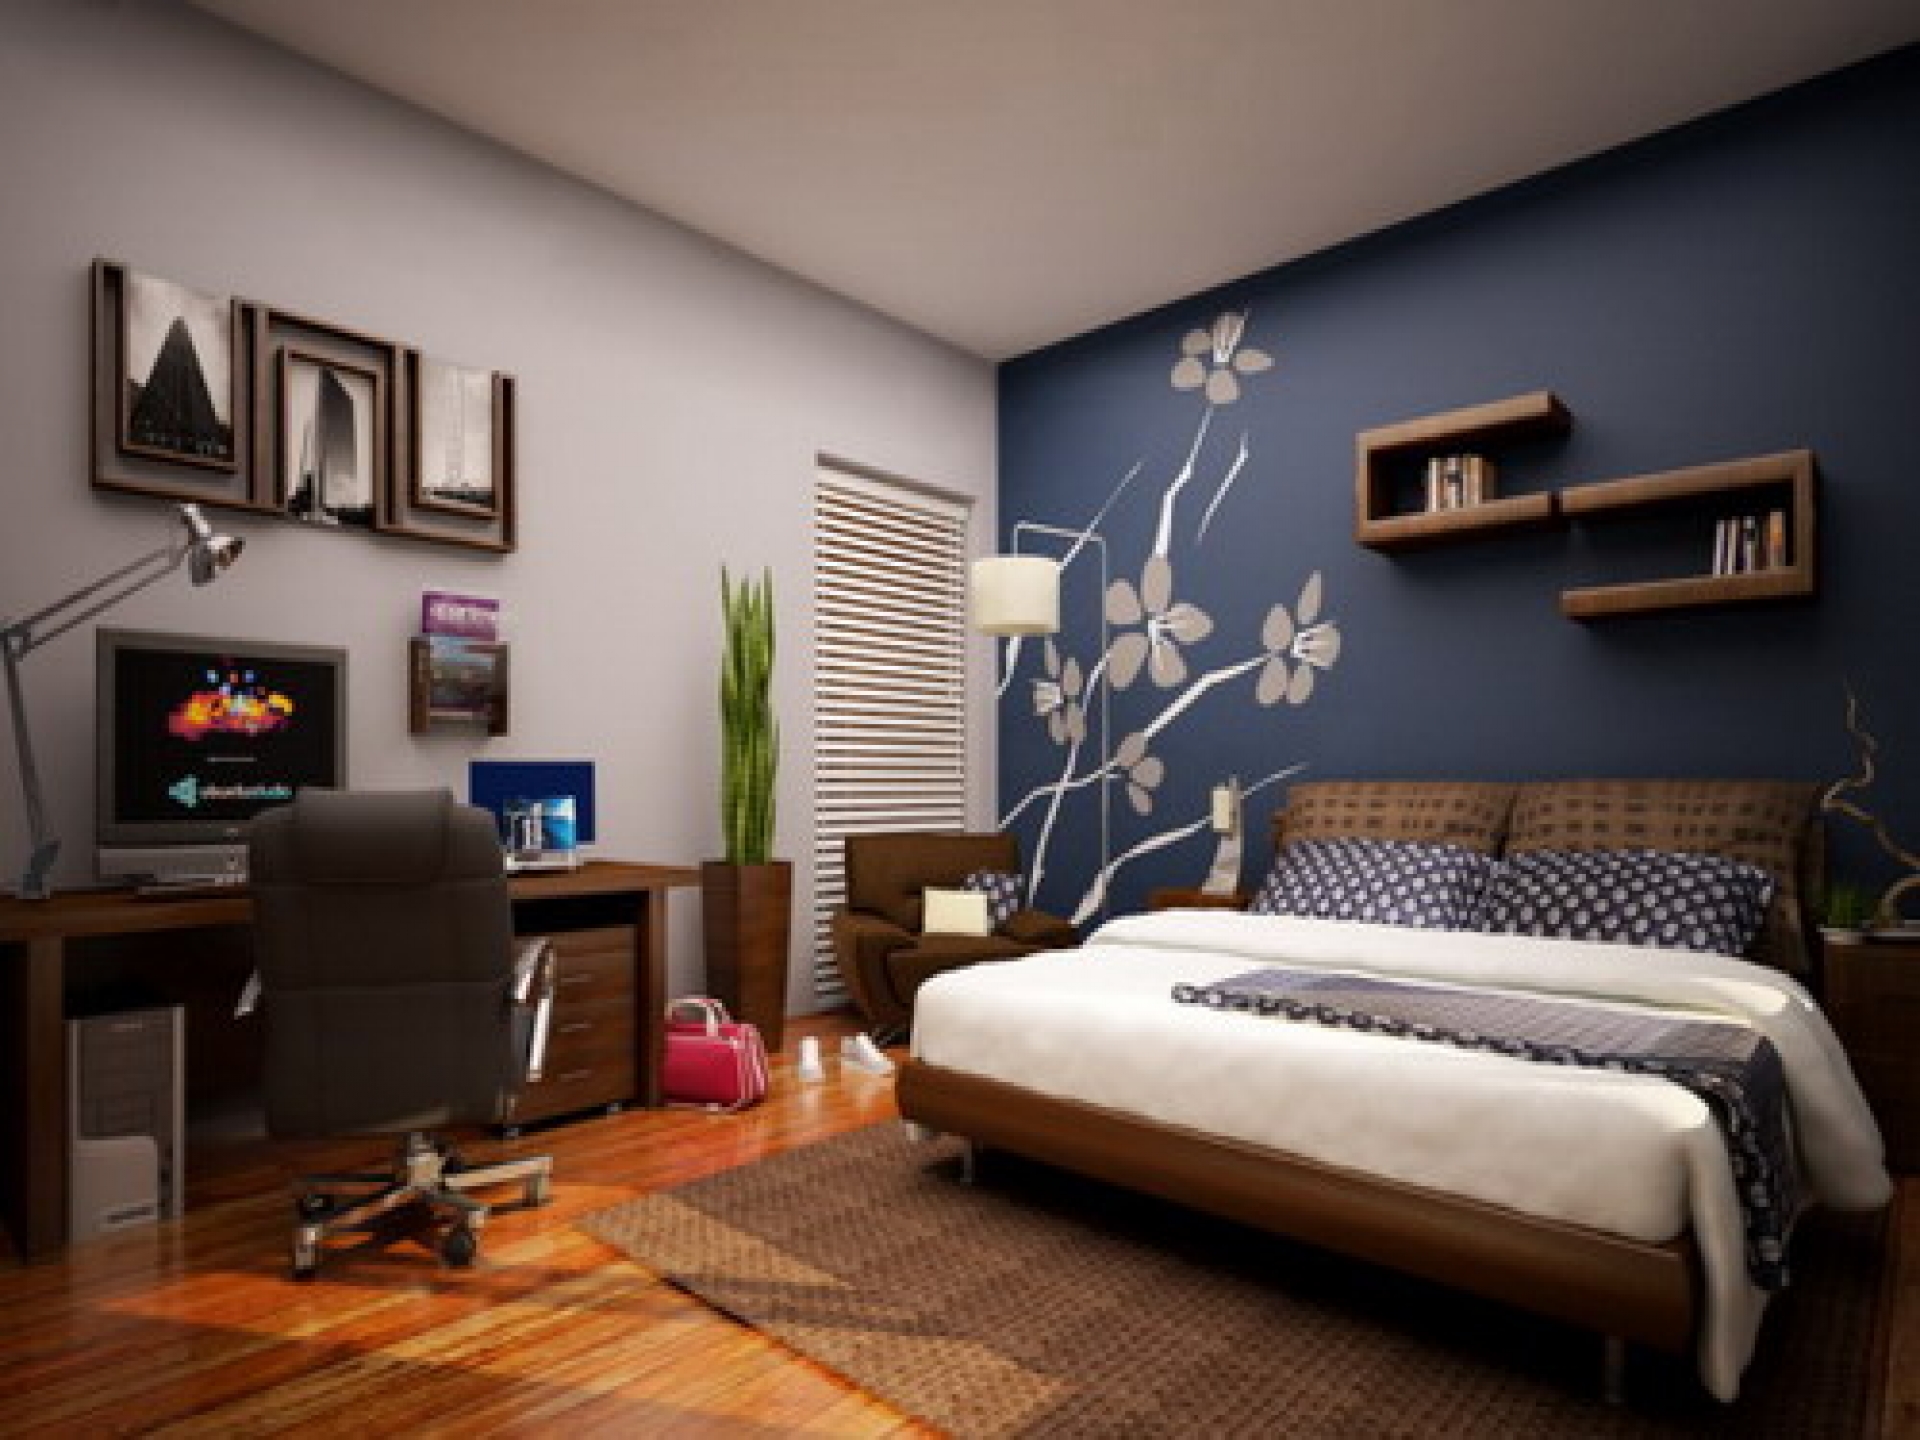 Cozy Cool Room Design Ideas With Cozy Design